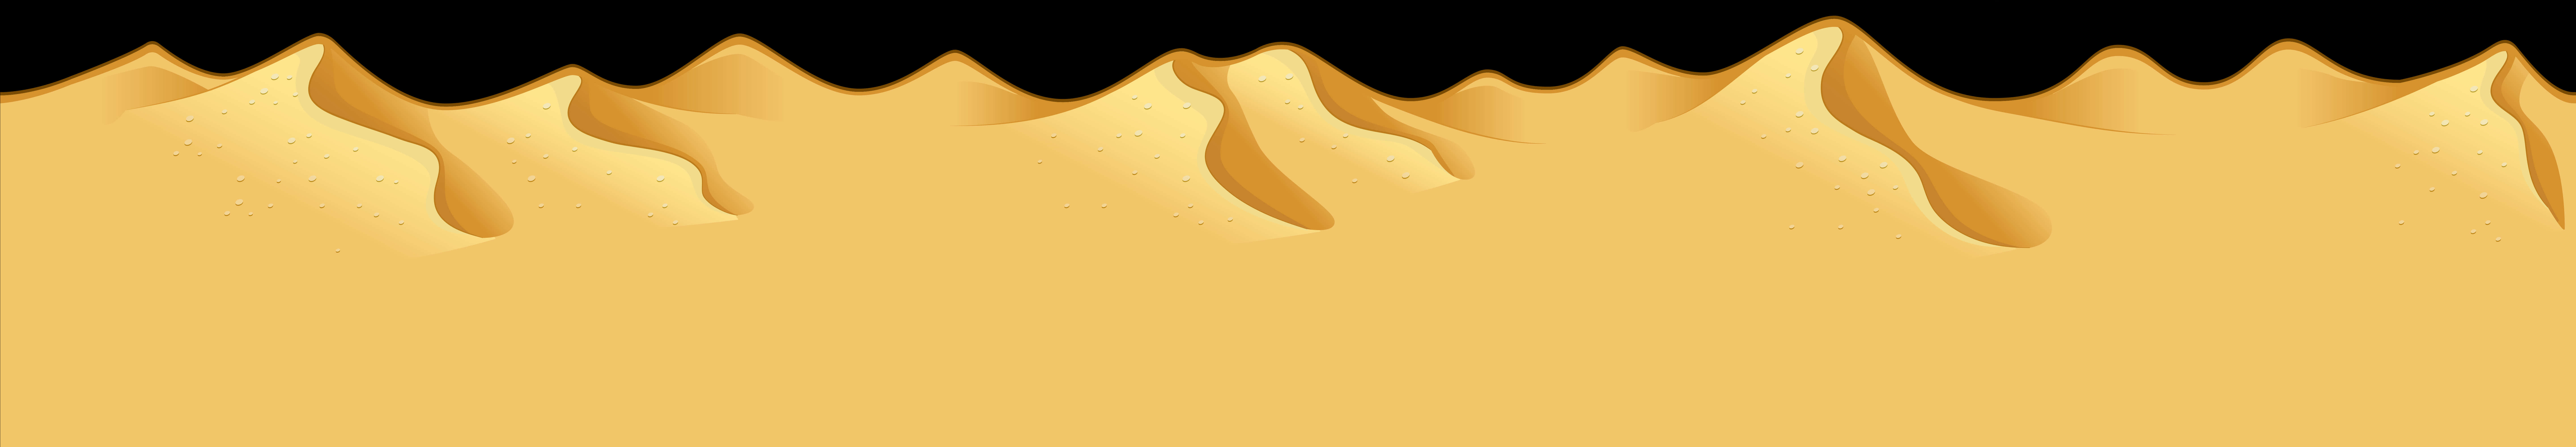 Desert Dunes Silhouette PNG image